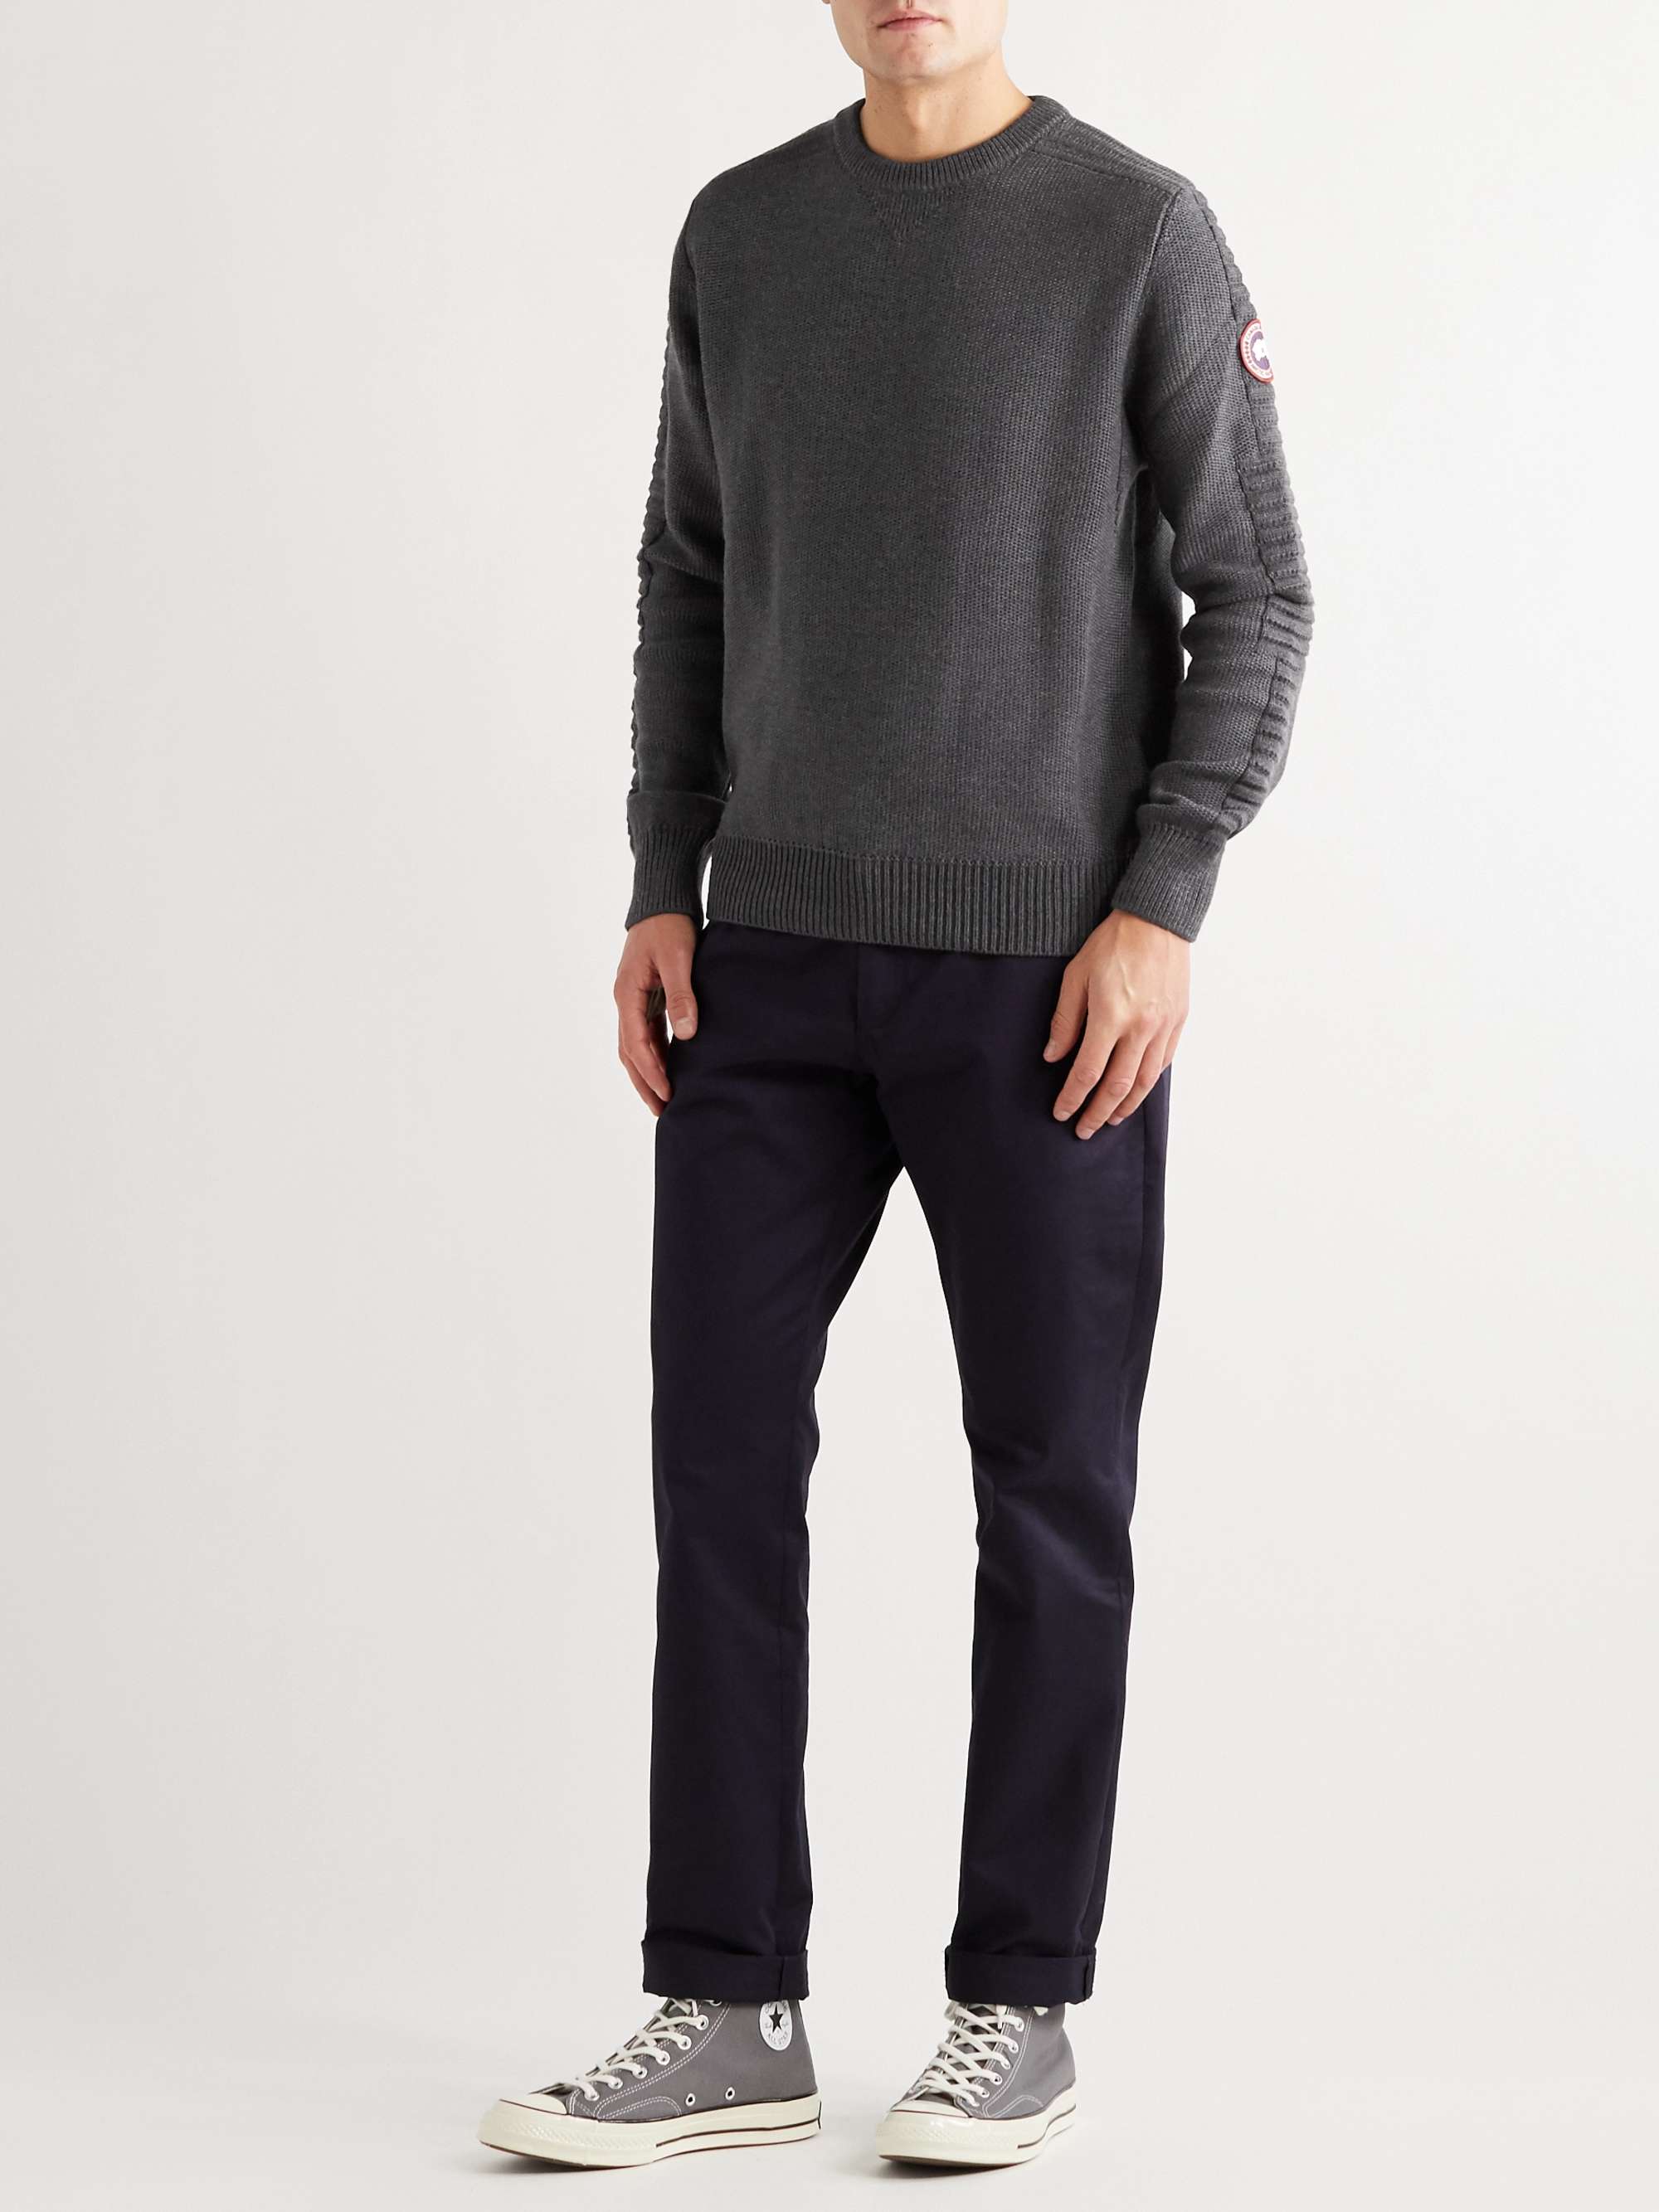 CANADA GOOSE Patterson Merino Wool Sweater for Men | MR PORTER